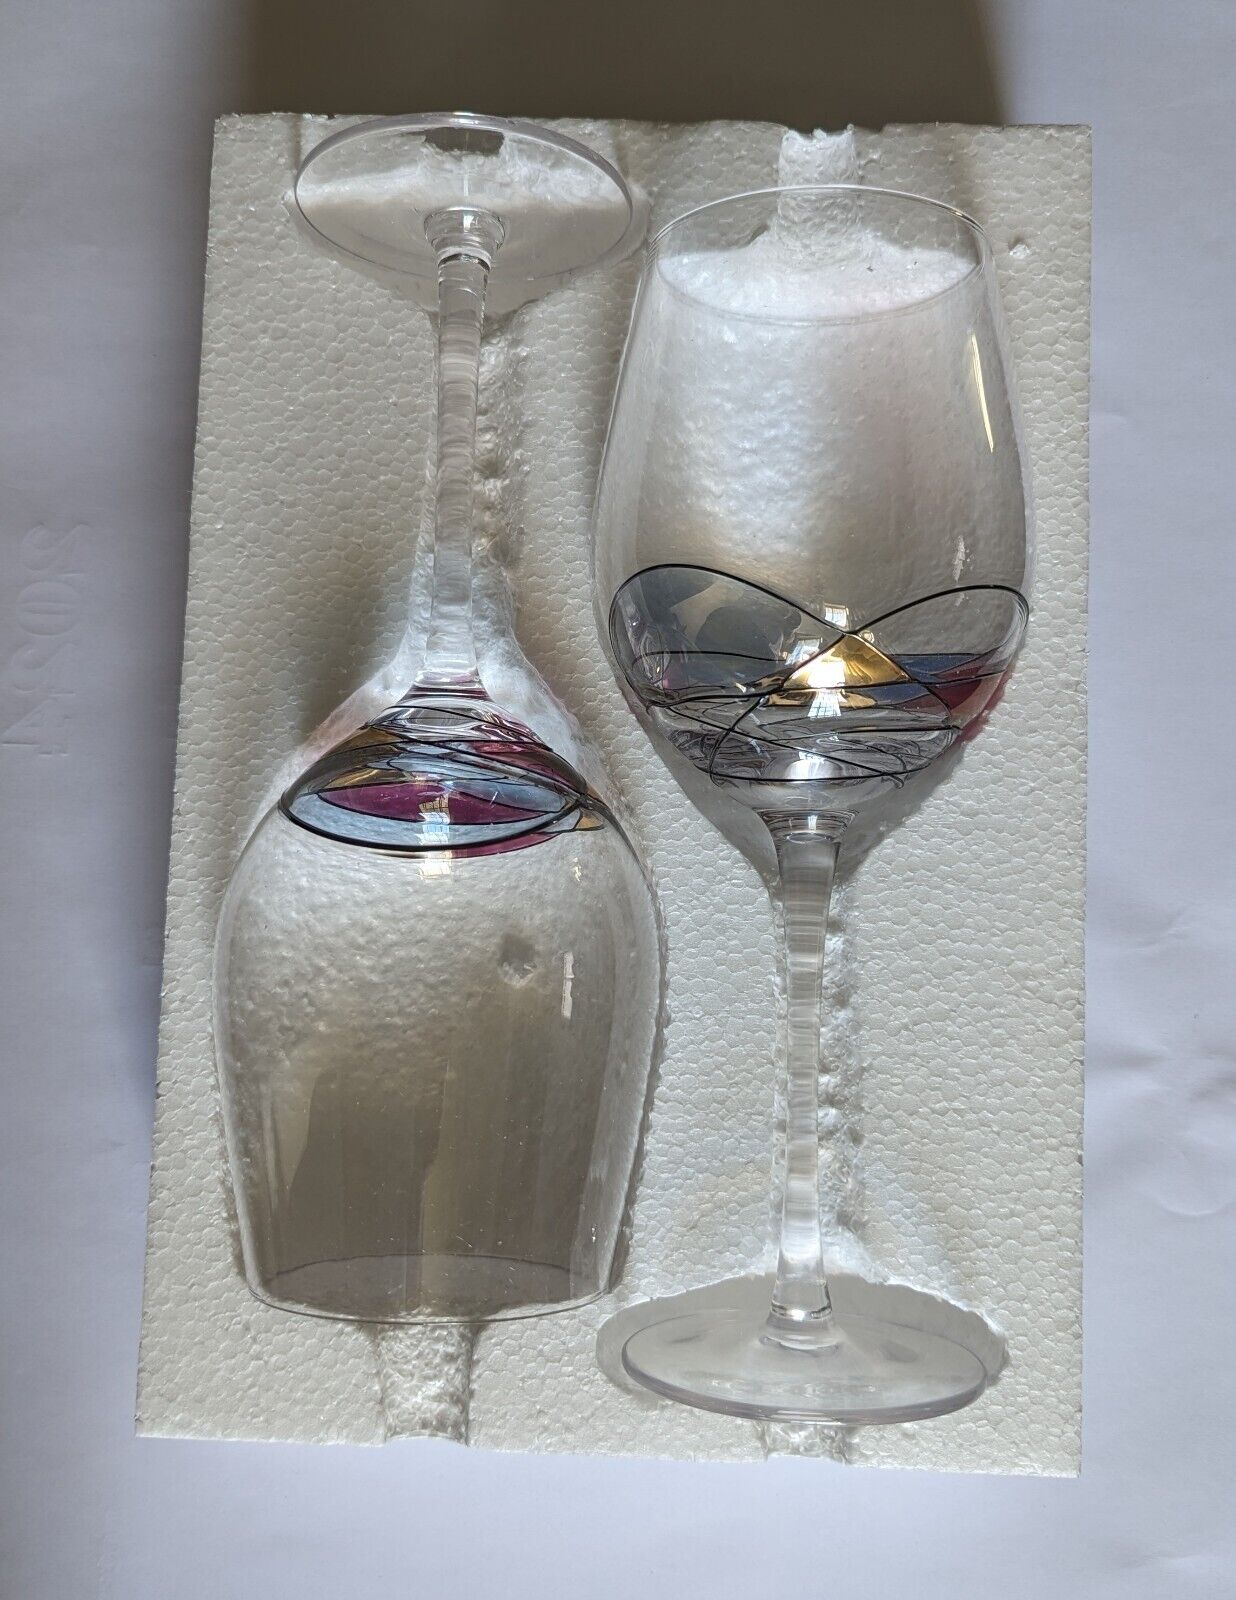 DAQQ Red Wine Glasses Set of 2 Hand Glasses: Pink, Light Blue, Gold 